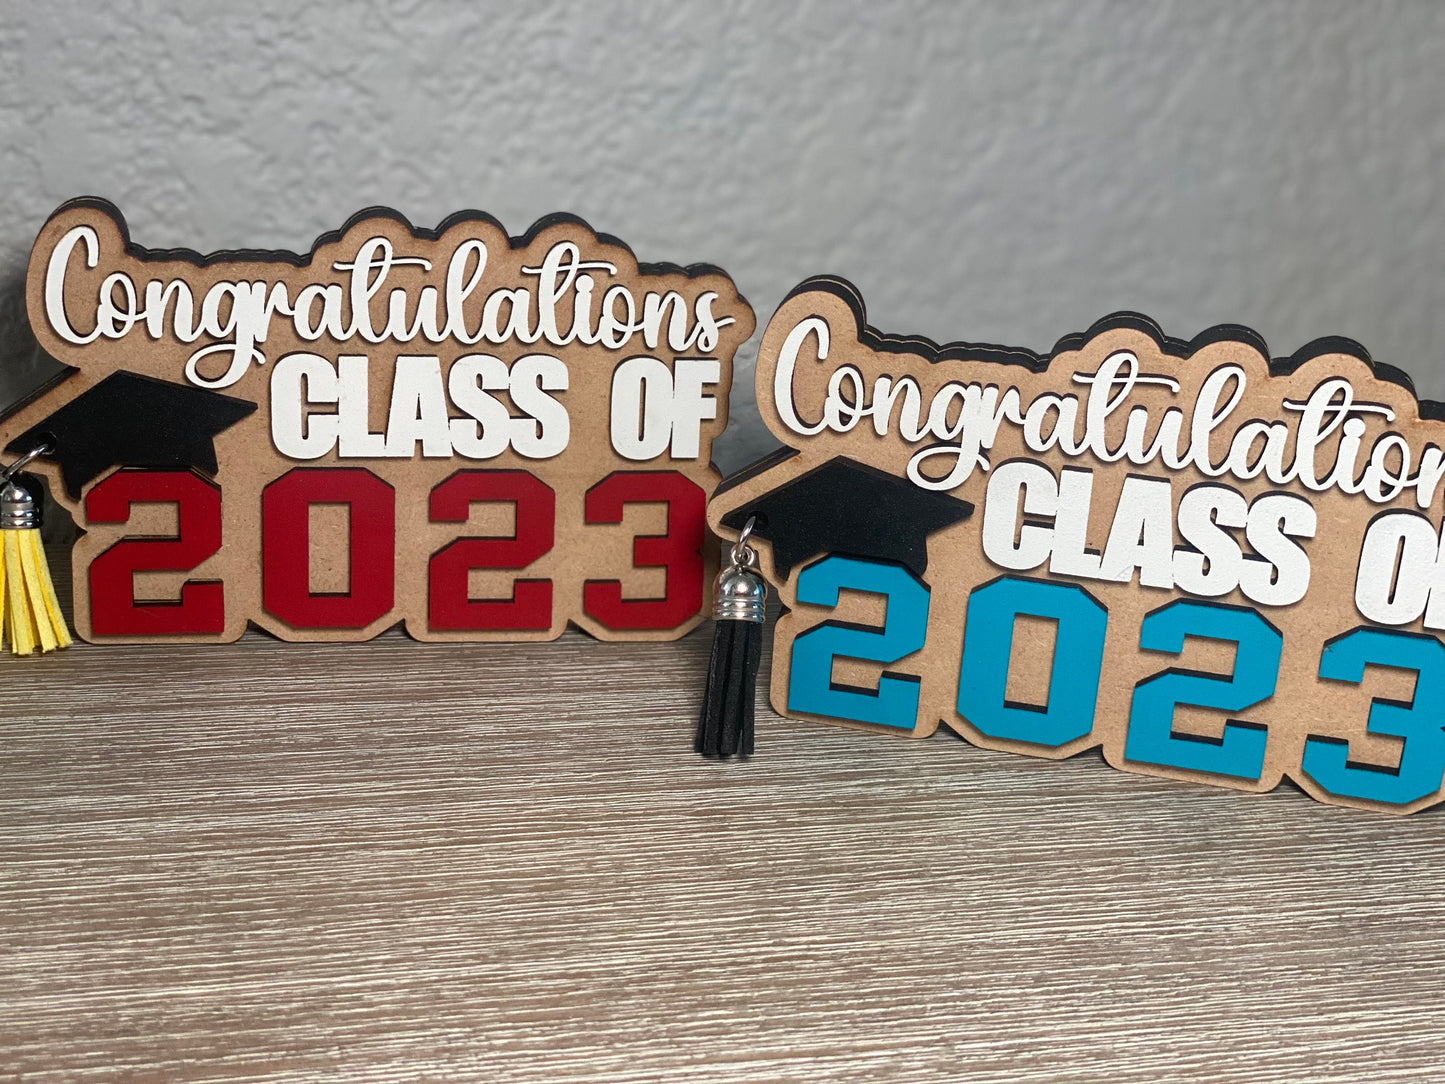 2023 Graduation Money Holder - High School Graduation Gift - Two Tier Money Holder for Graduation Party - Gift for High School Graduate